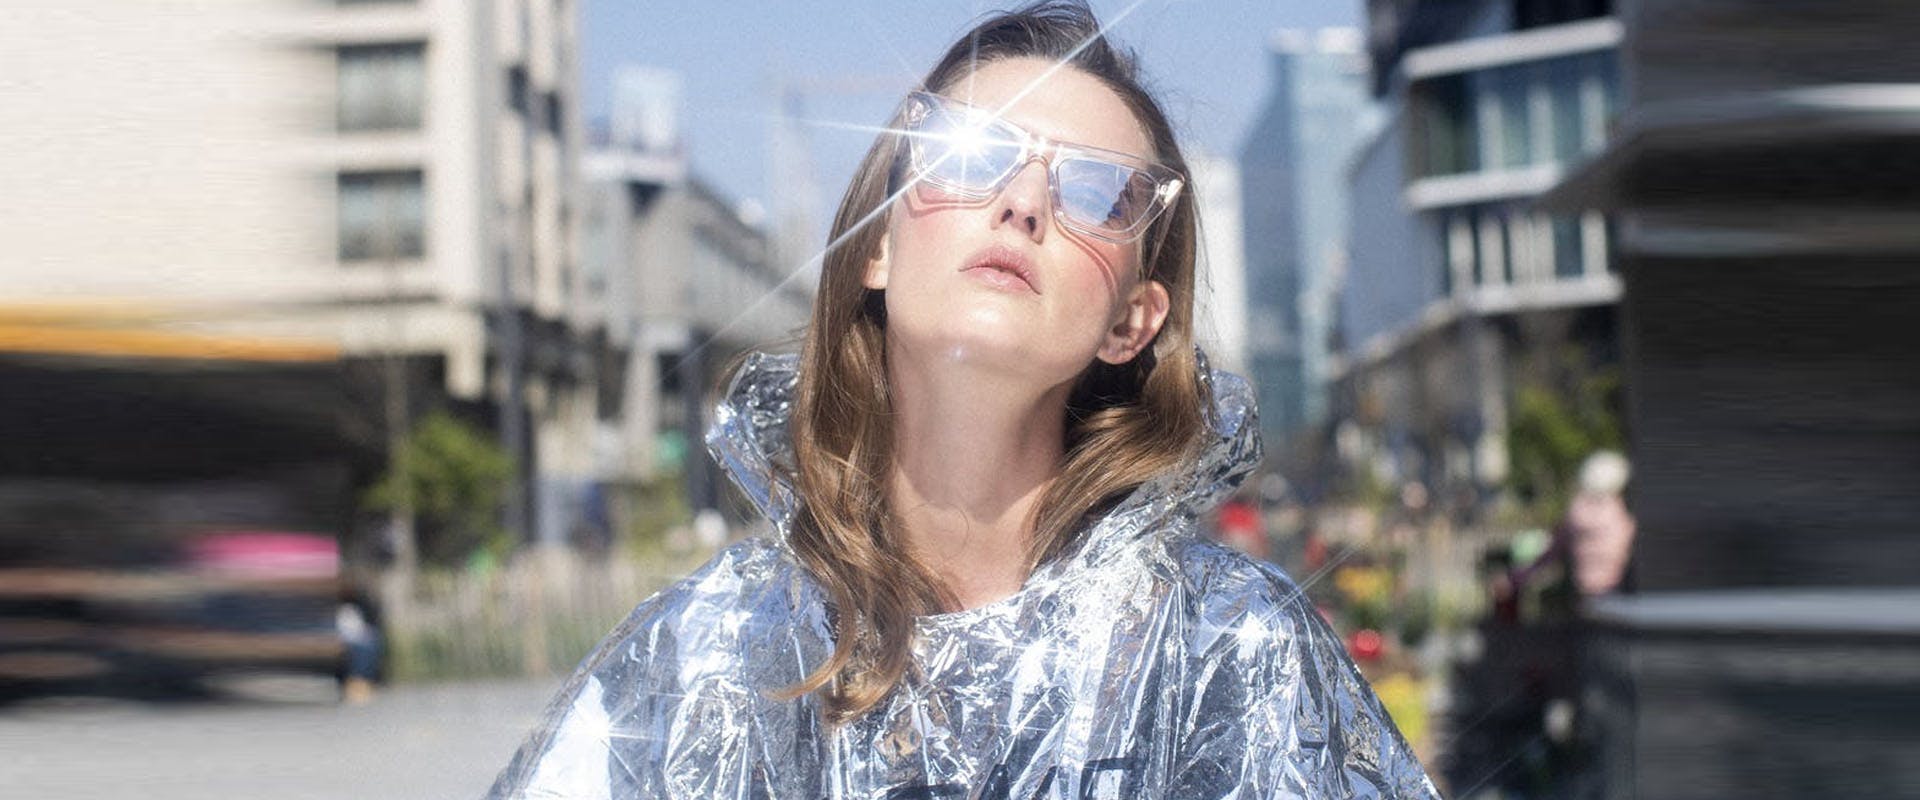 clothing apparel coat person human raincoat sunglasses accessories accessory